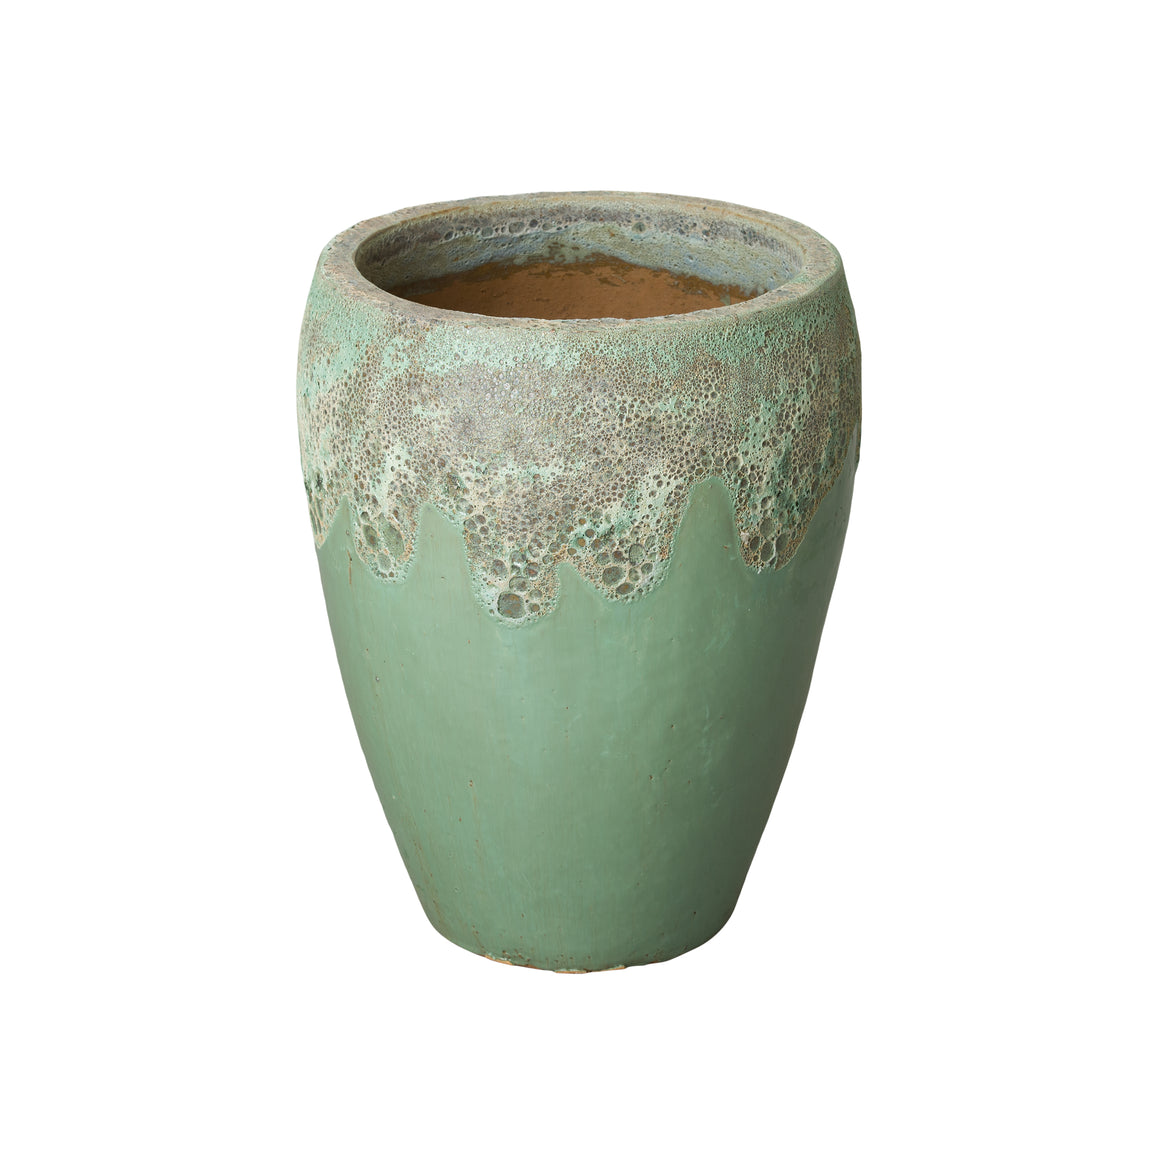 Round Ceramic Planter with a Reef/Spa Green Glaze